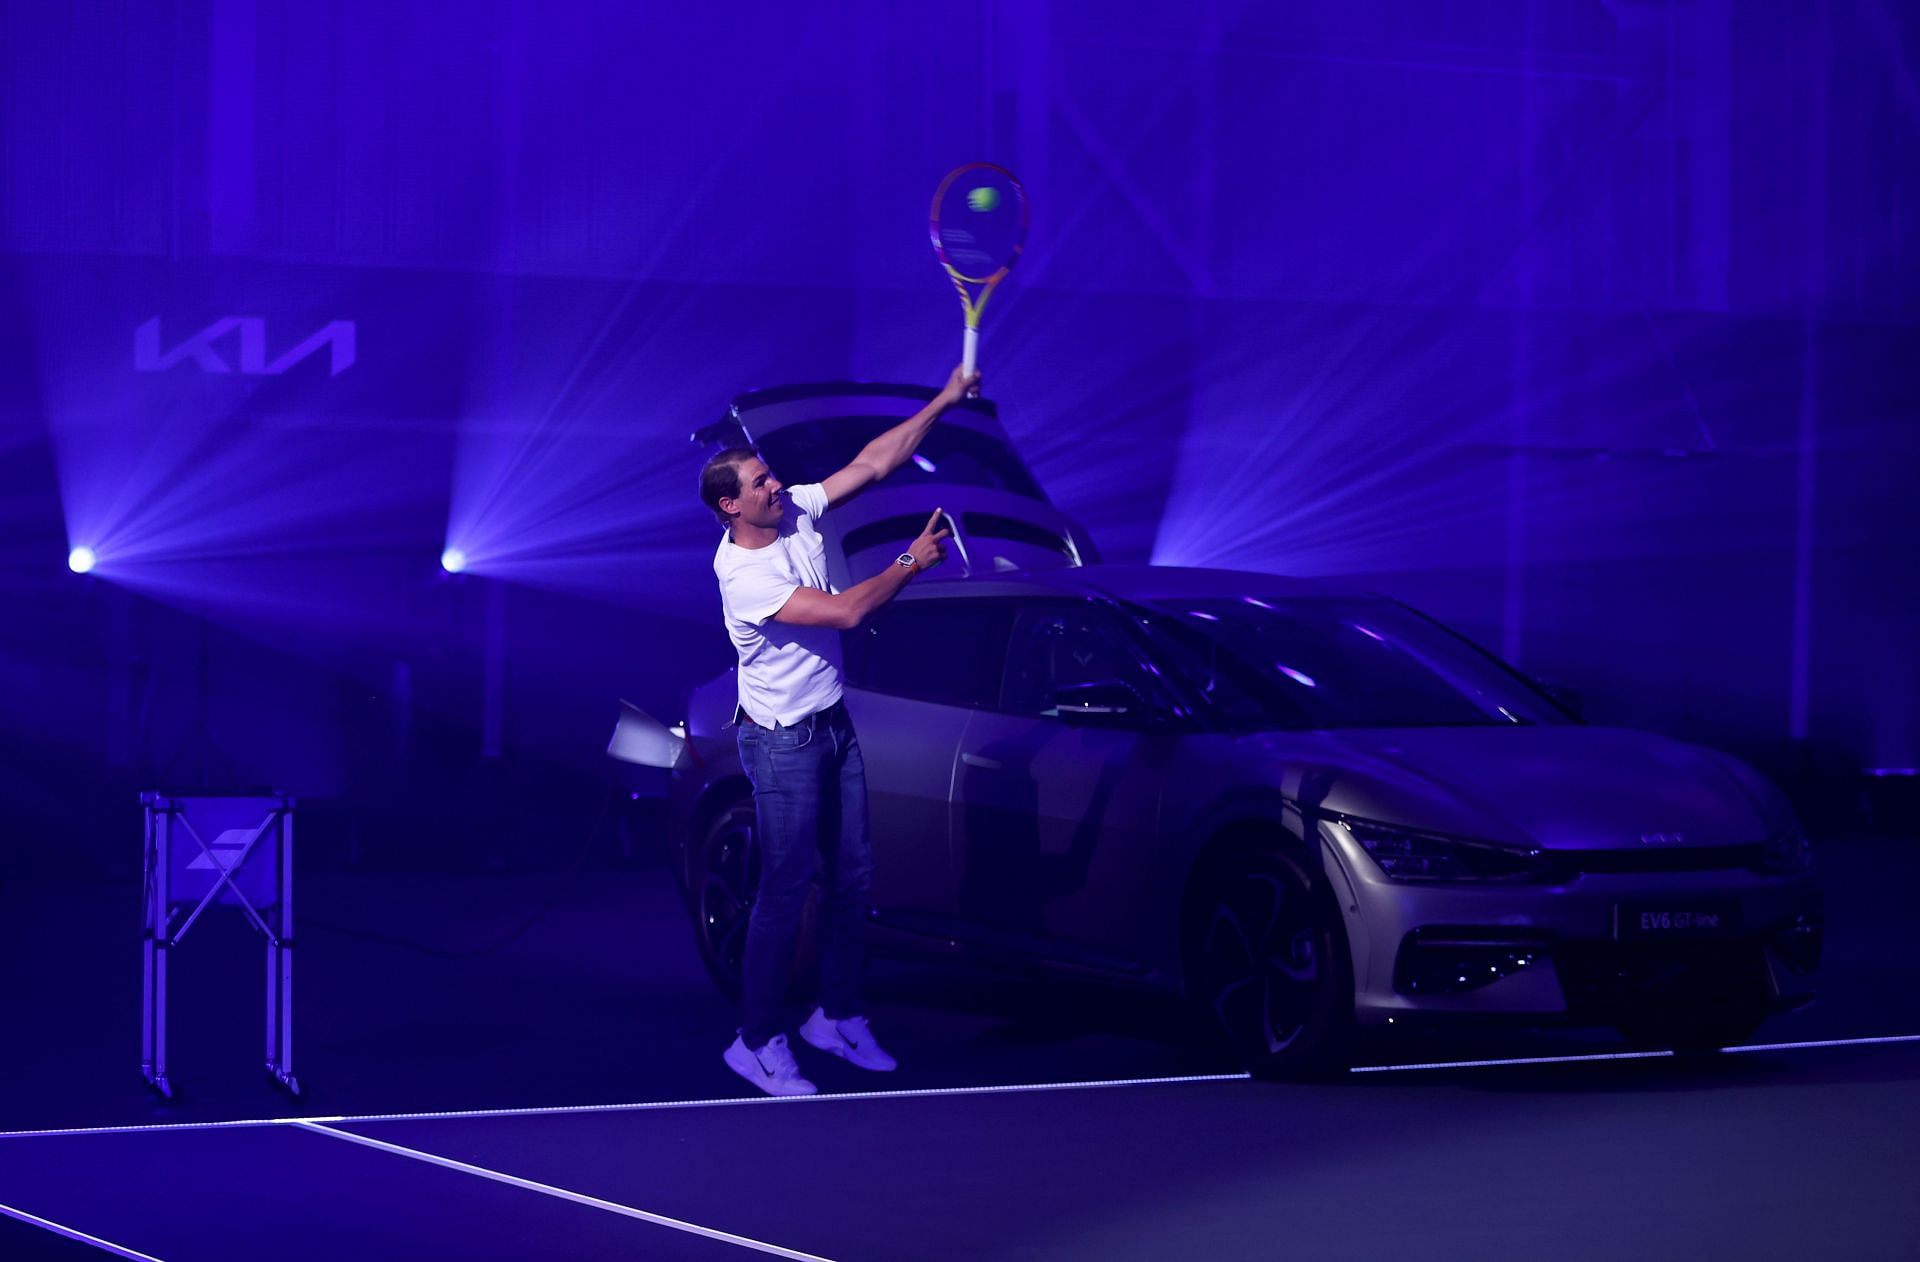 Rafael Nadal is sponsored by several notable brands